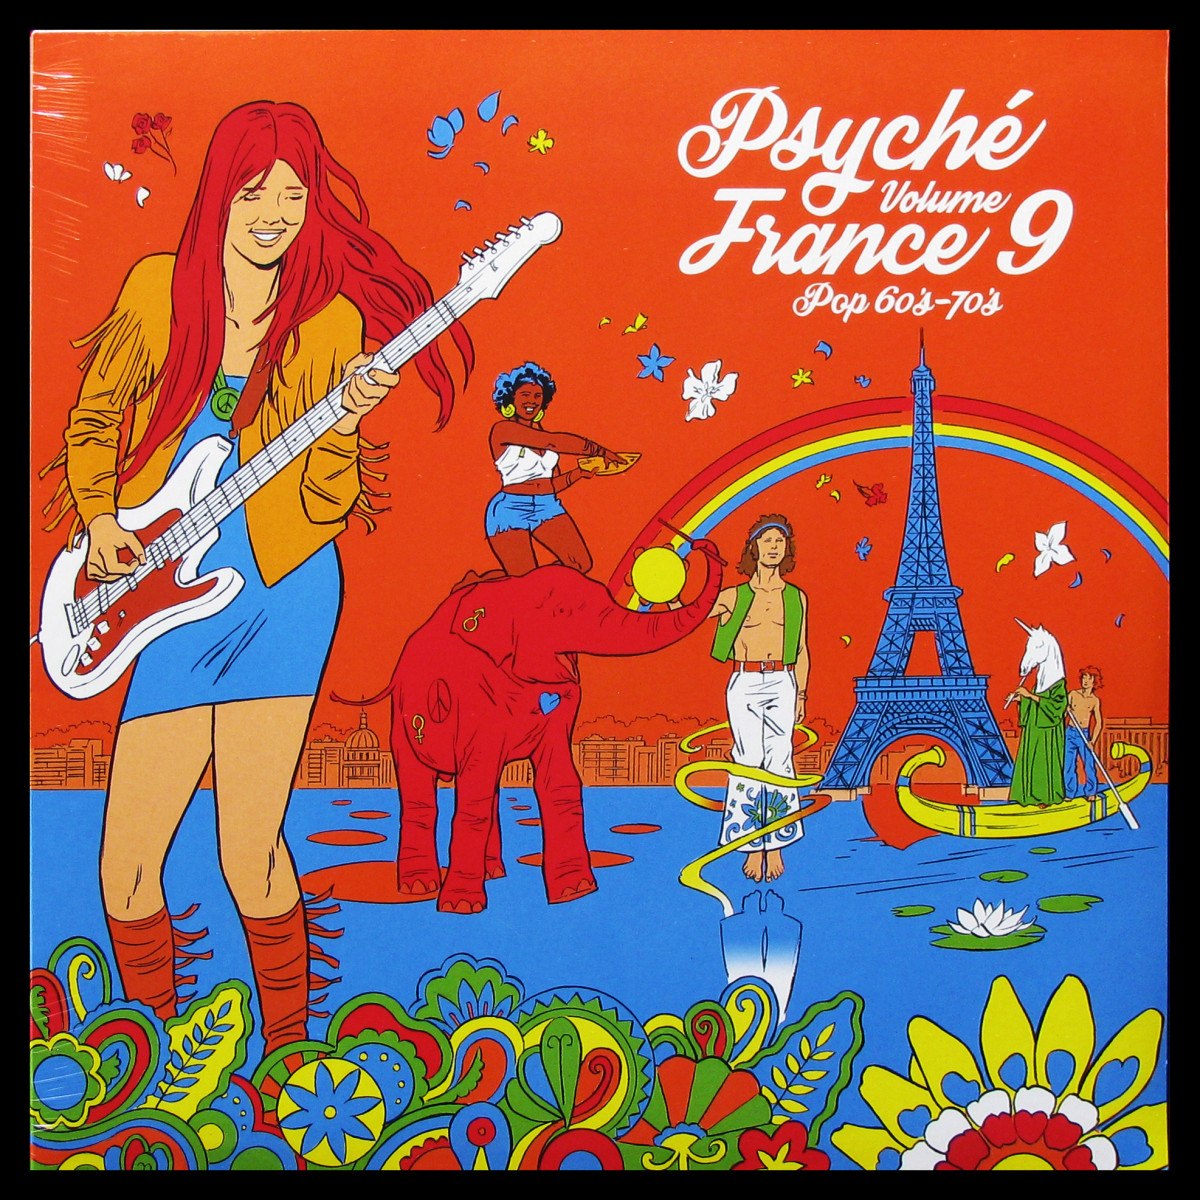 Psyche France Volume 9: Pop 60's-70's